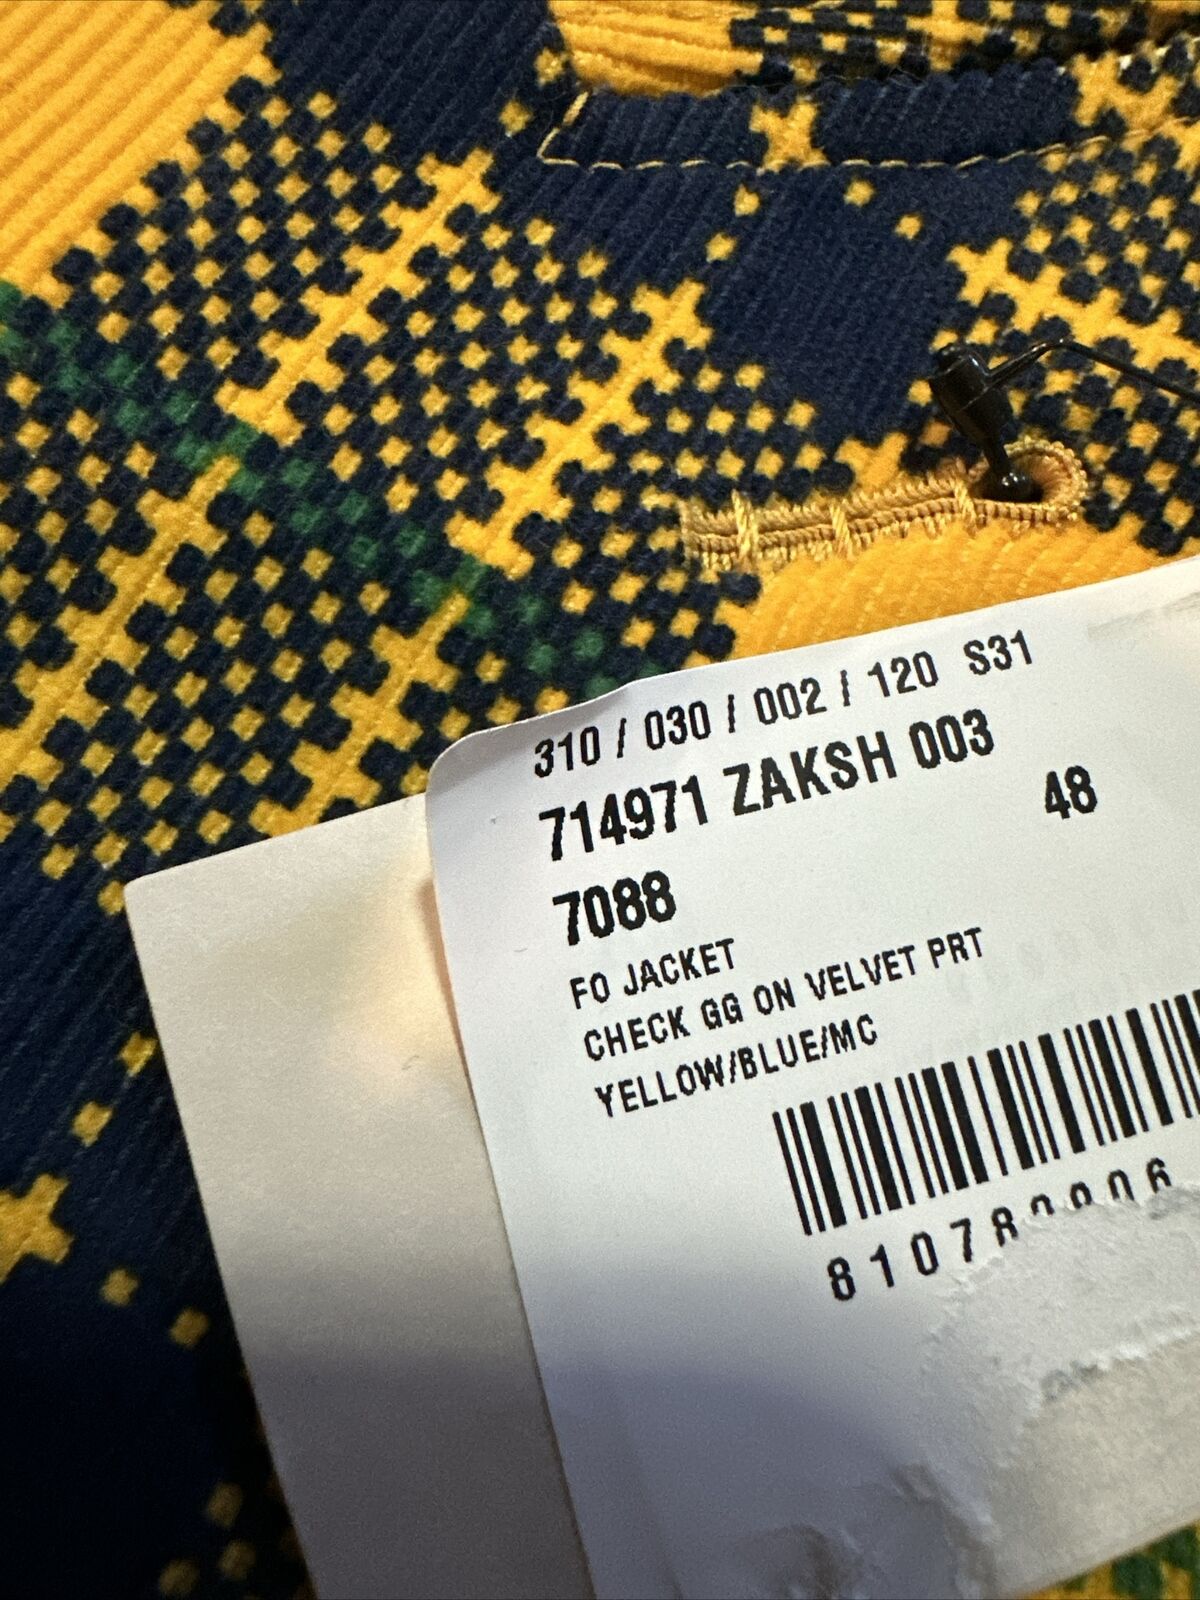 Gucci Men Tartan Cotton Sport Coat Blazer Yellow/Black/Gr. 38 US/48 Eu NET $3800